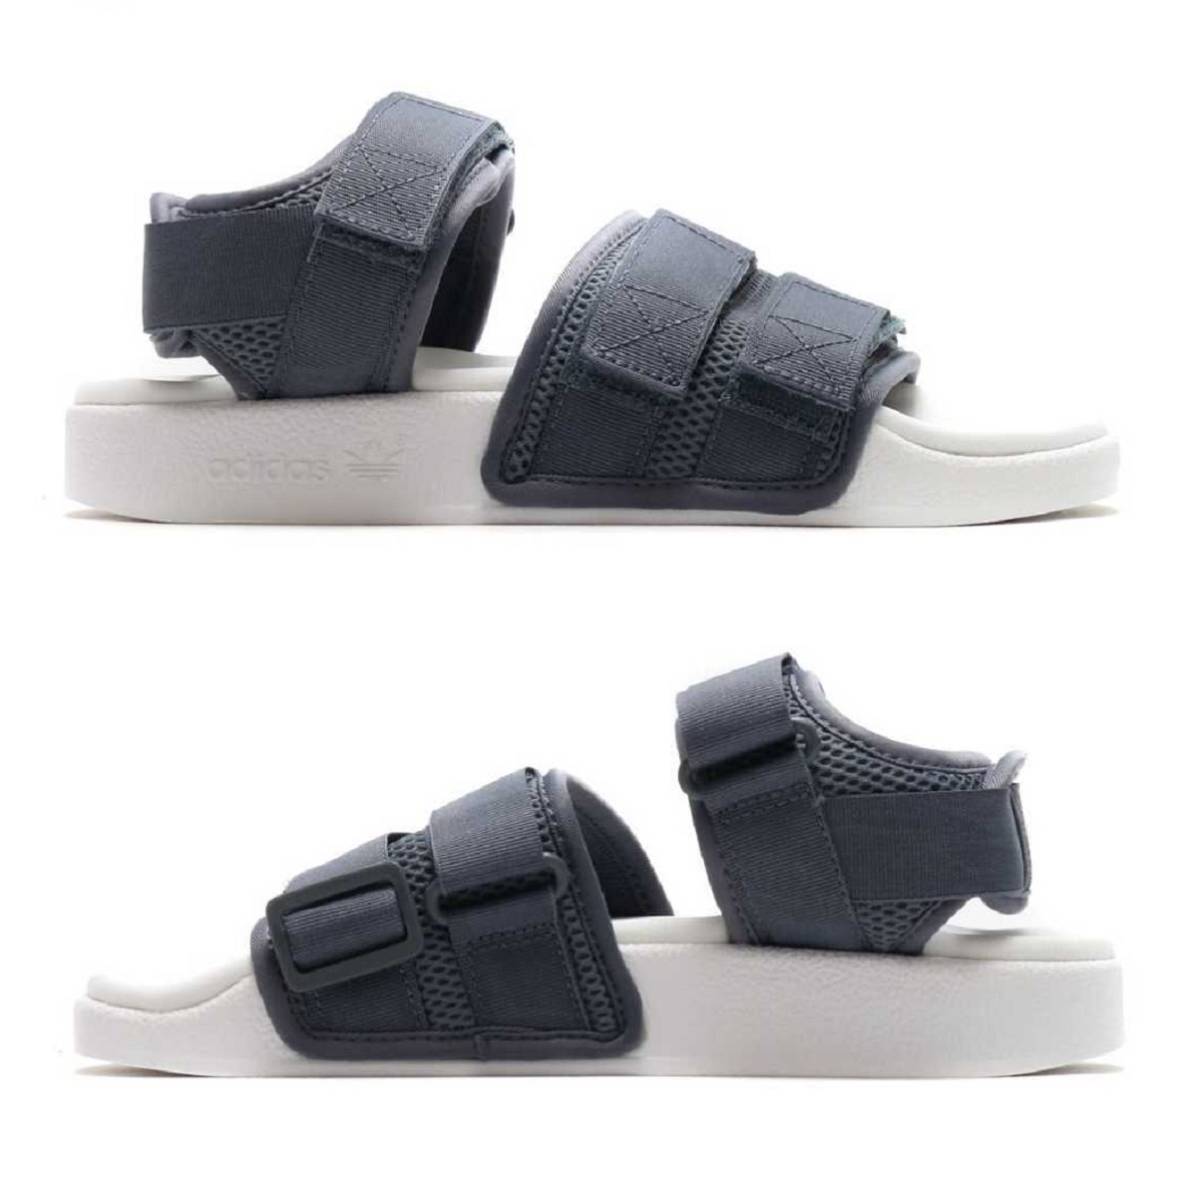  Adidas 26.5cm US:9 Adi reta sandals 2.0 W regular price 10989 jpy ADILETTE SANDAL 2.0 W onyx Originals